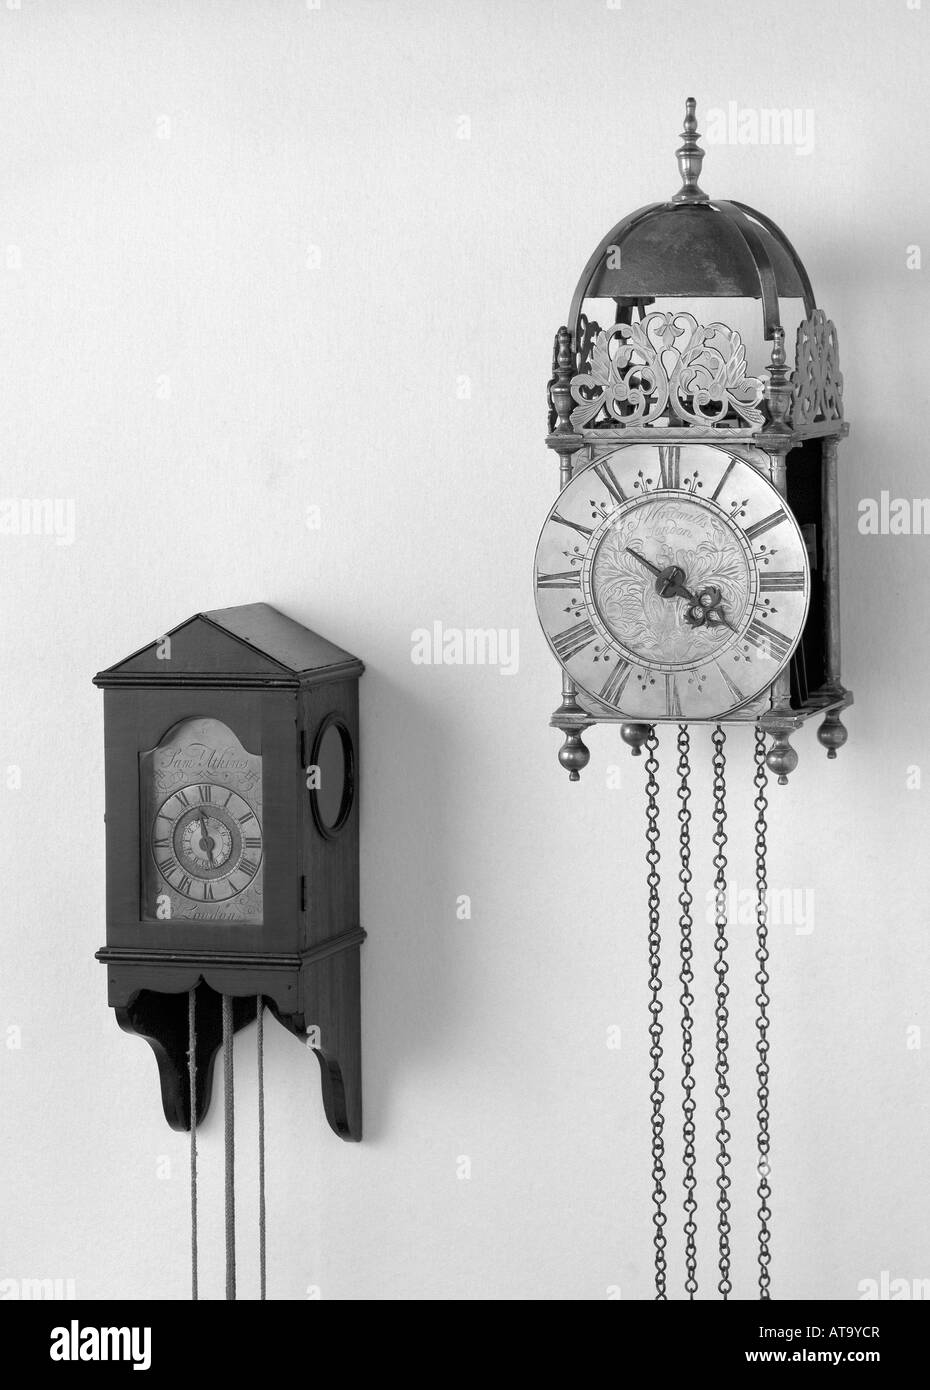 Wall clocks by Atkins and Windmills Stock Photo